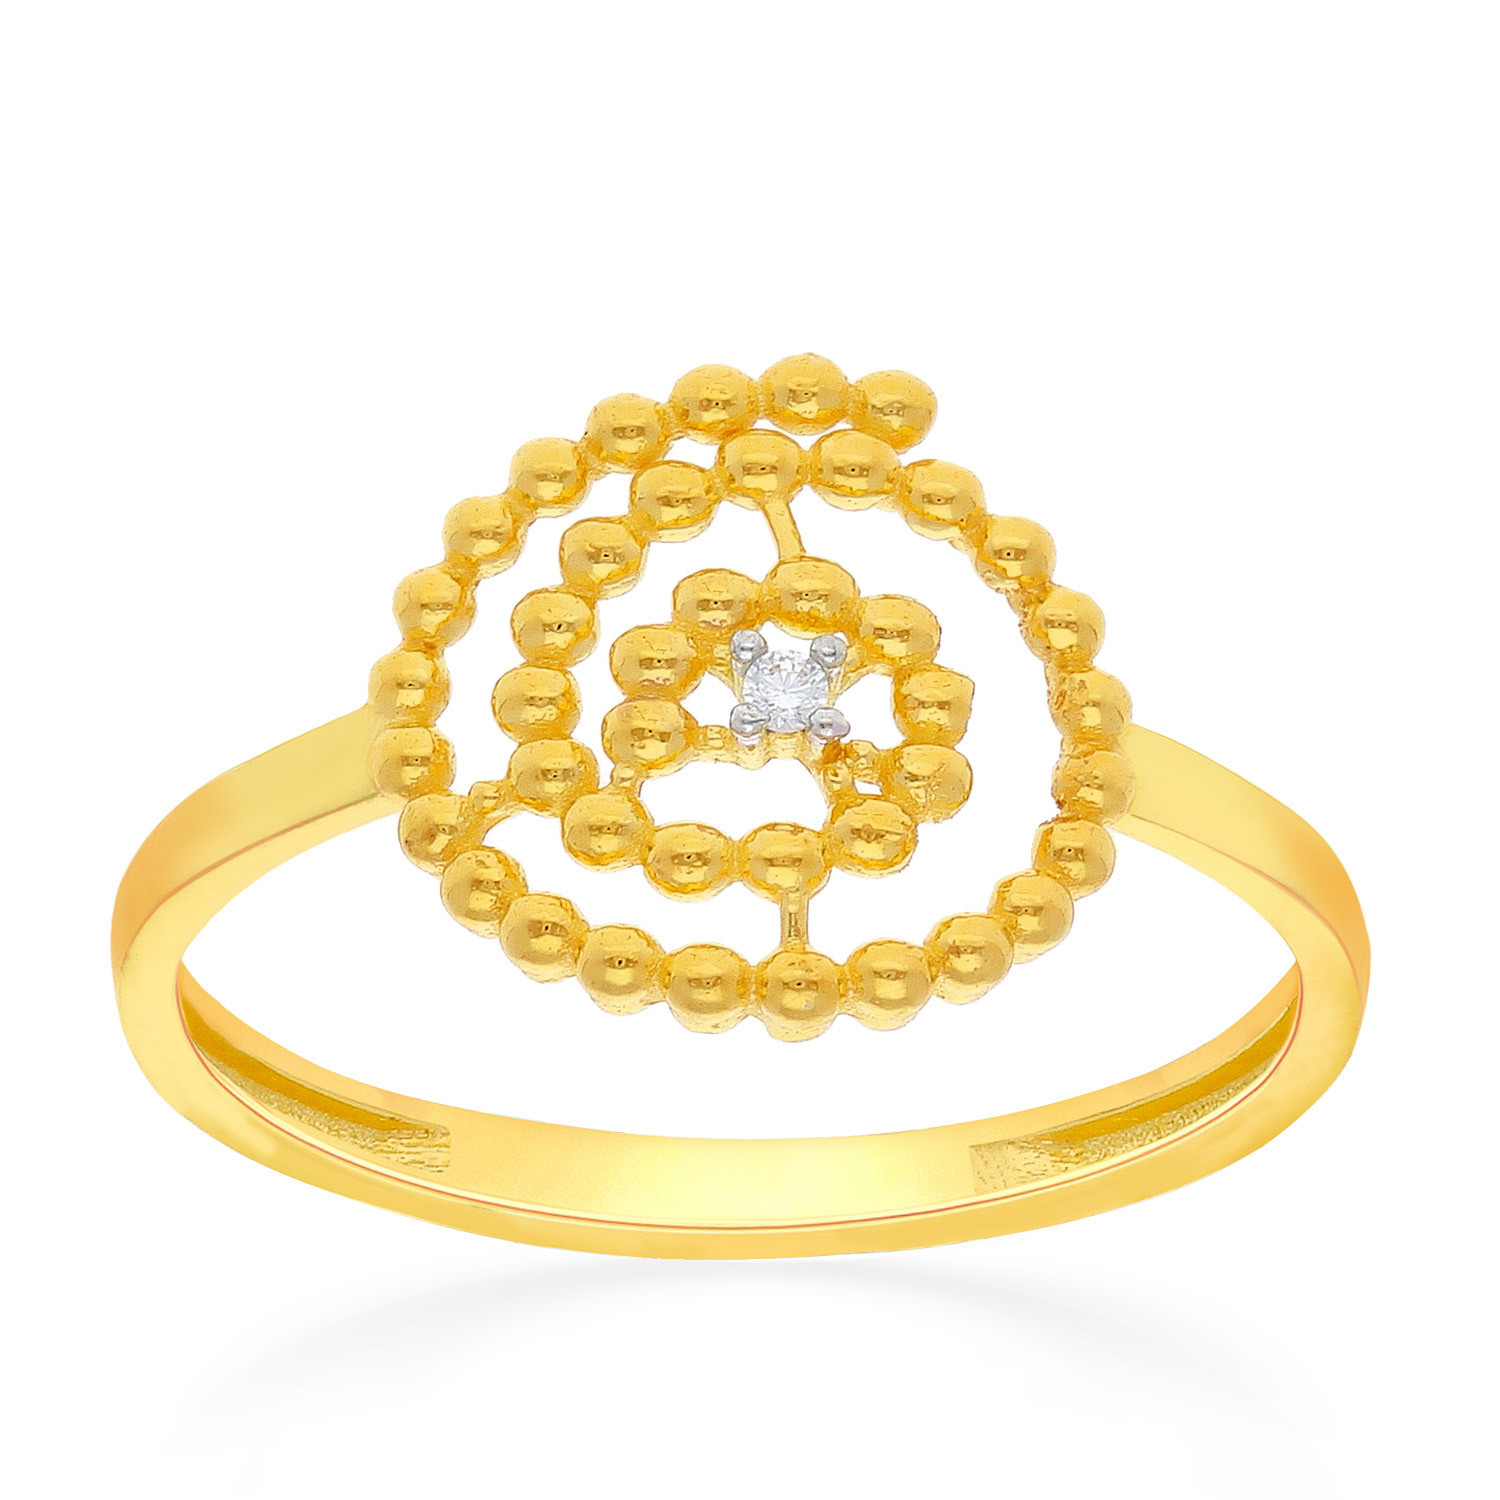 Buy Malabar Gold Ring RG3698731 for Men Online | Malabar Gold & Diamonds